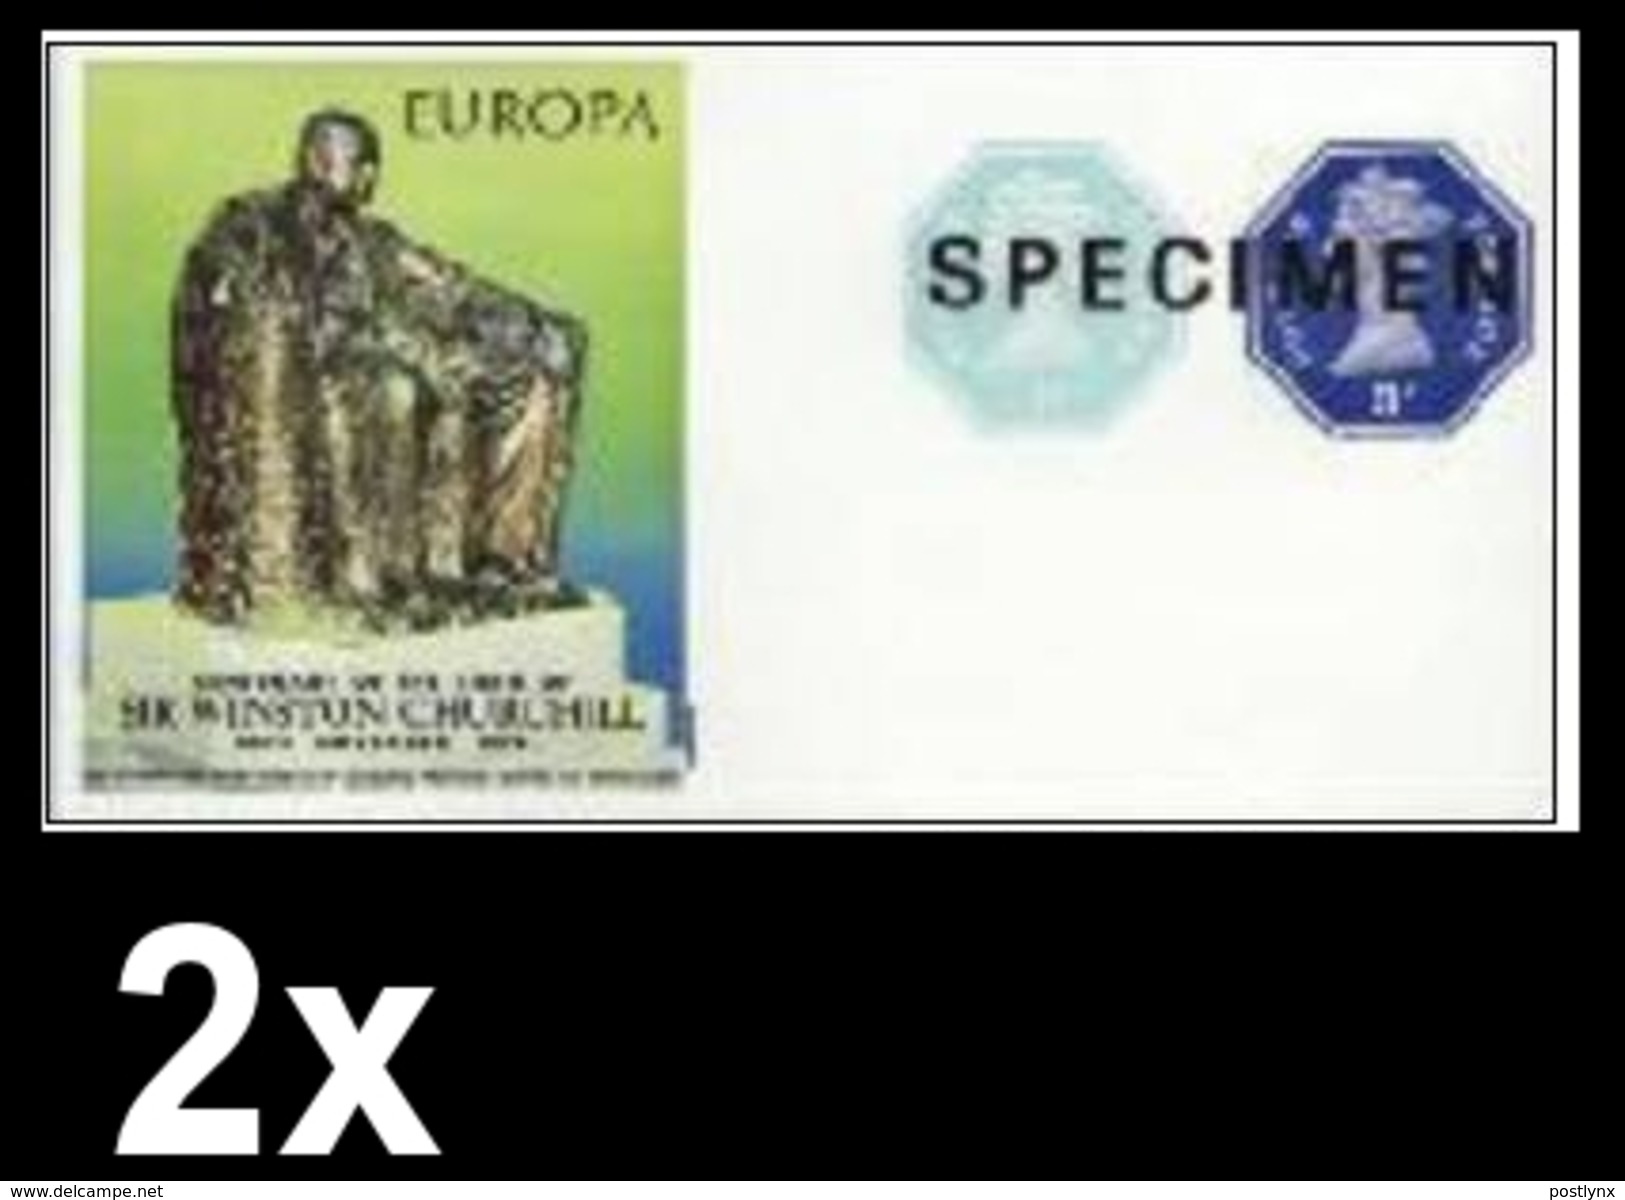 BULK:2 X GREAT BRITAIN 1974 Monument EUROPA Churchill Machines  SPECIMEN IMPERF:sheetlet [muestra,Muster,spécimen] - Imperforados